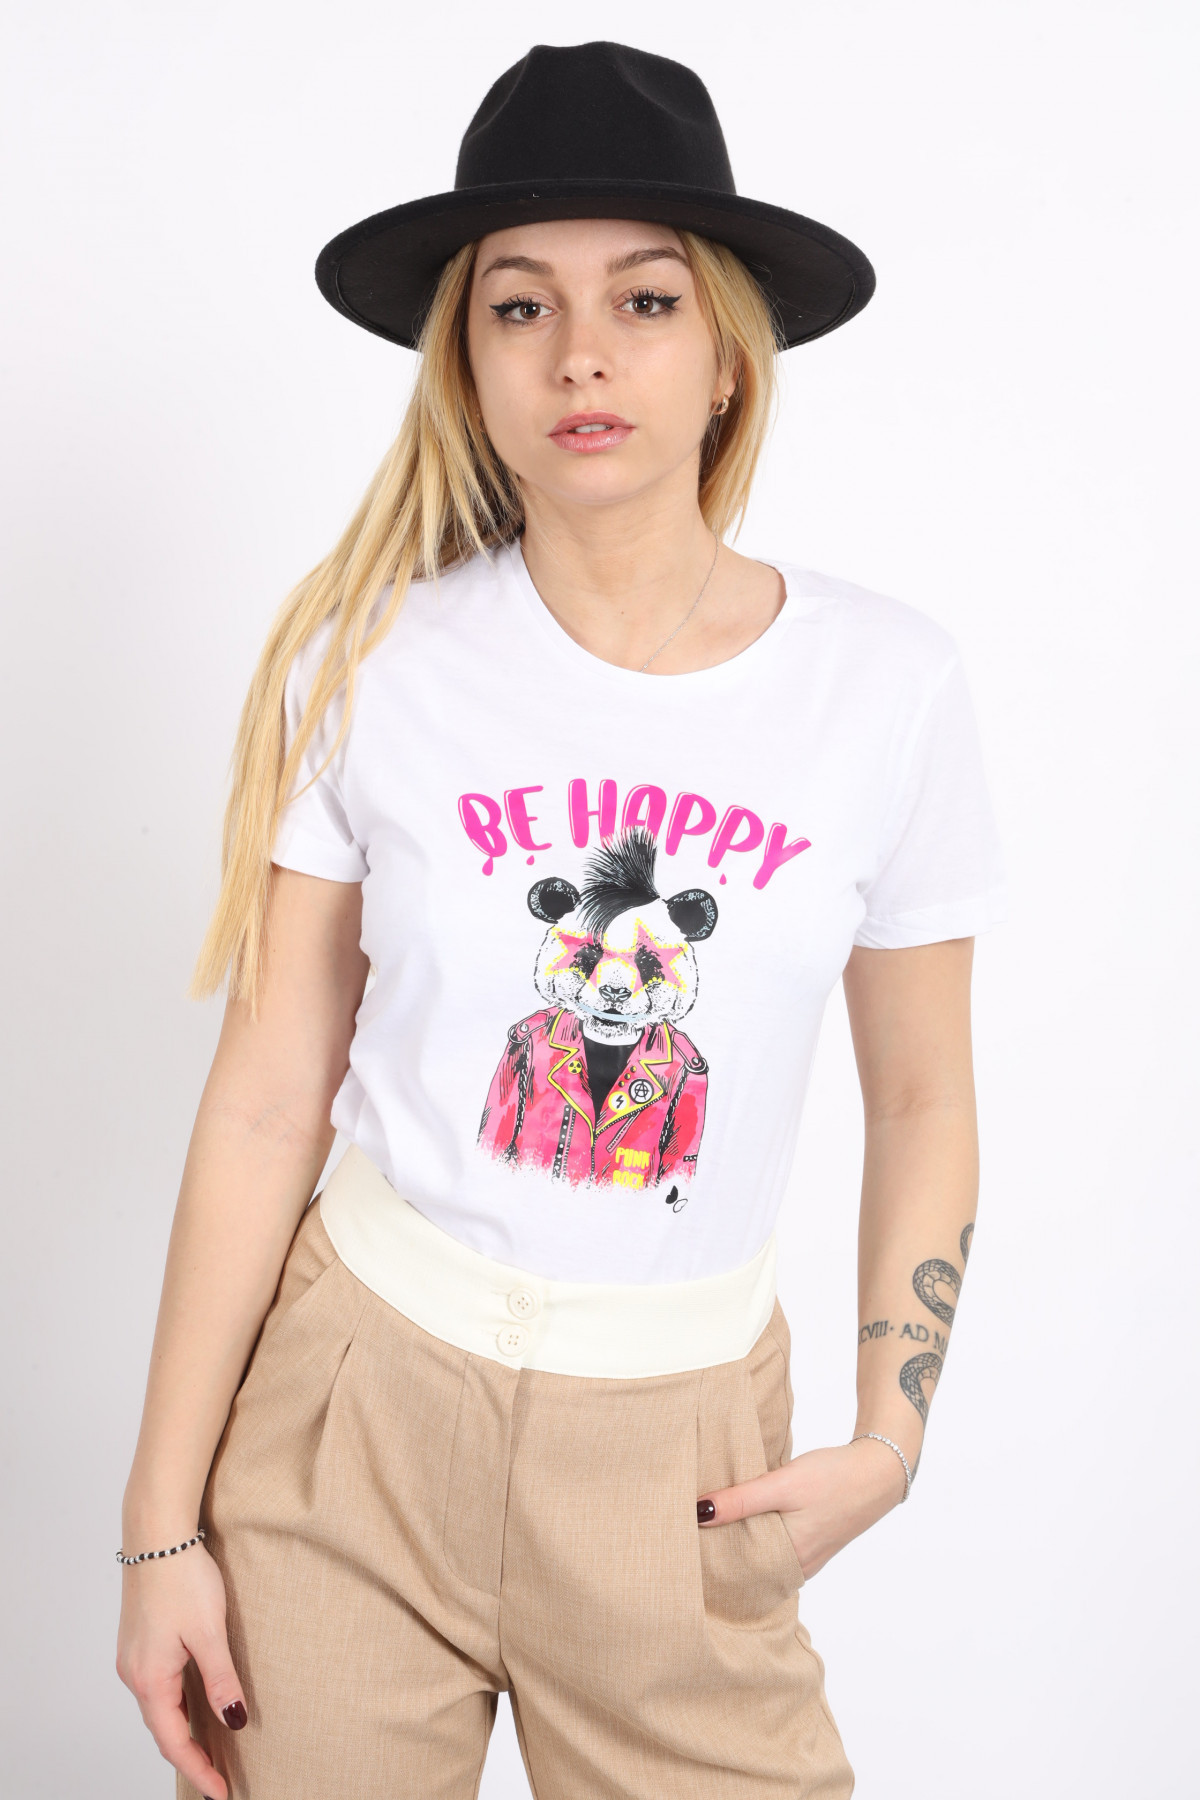 Be Happy T-Shirt